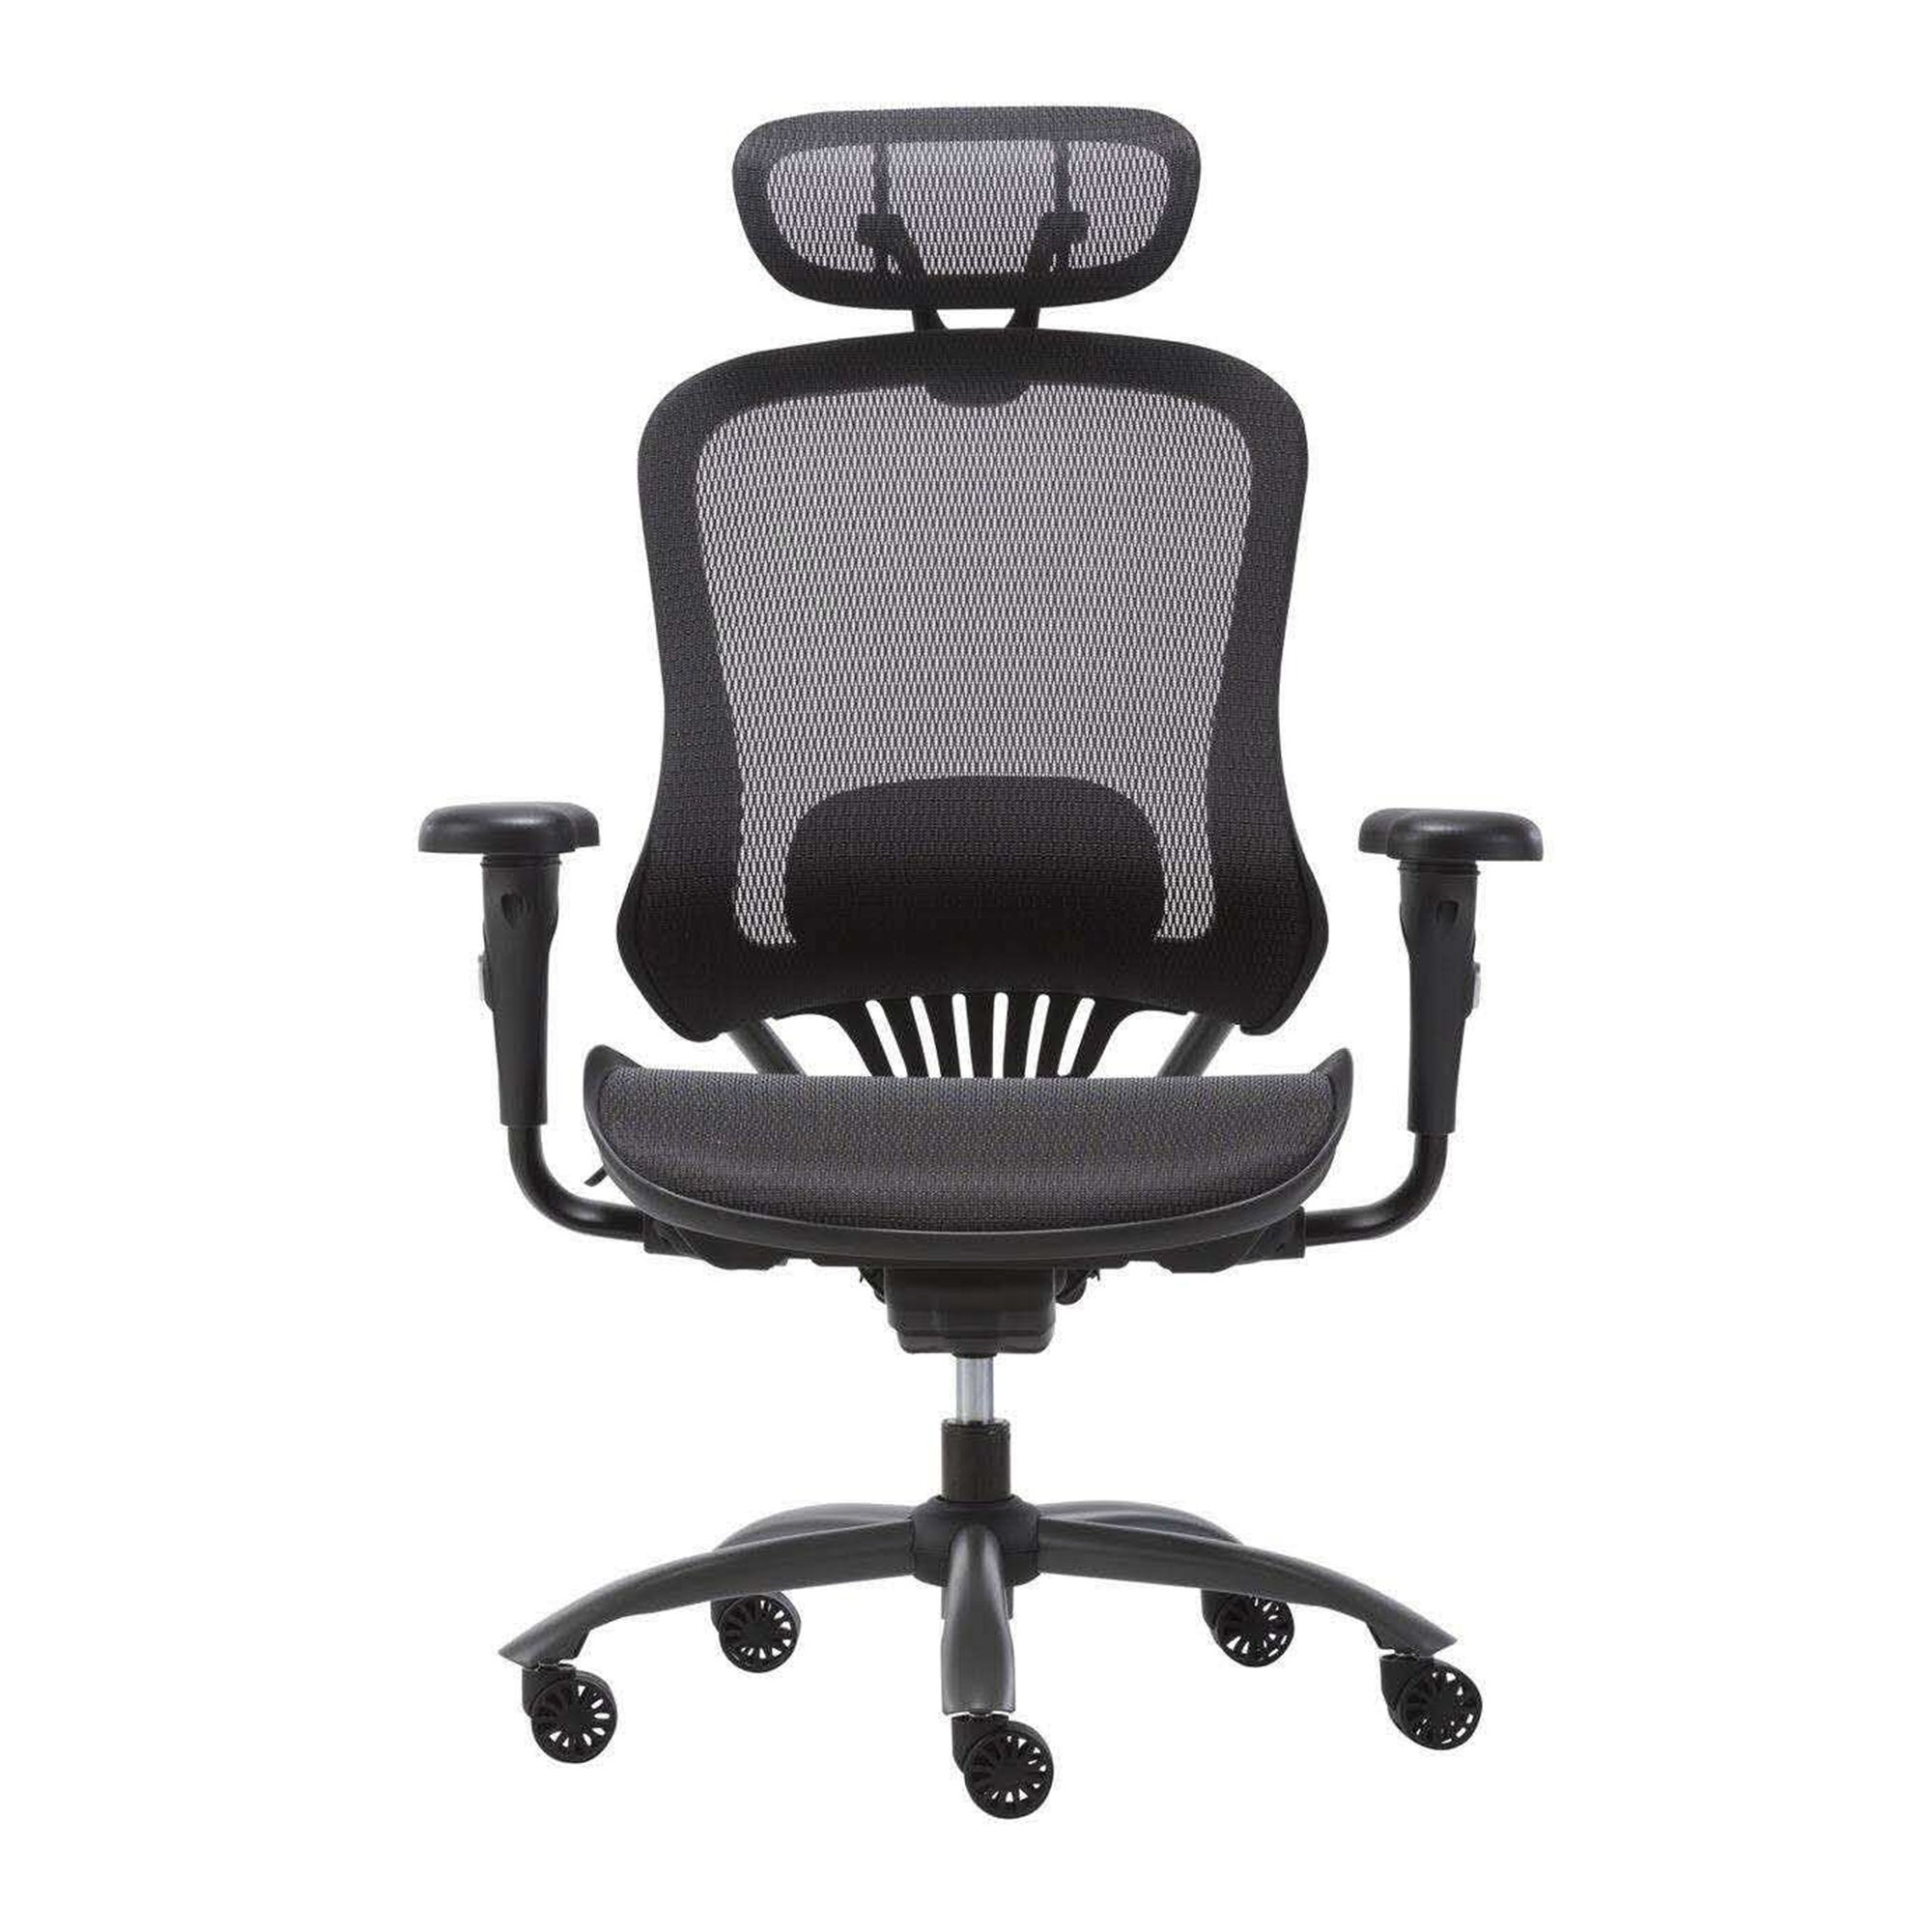 Ergousit Ergo 2D Ergonomic Office Chair - Mesh Computer Desk Chair - High Back Chair with Height Adjustable Lumbar Support and 2D Armrest- Swivel Executive Drafting Chair (Black)